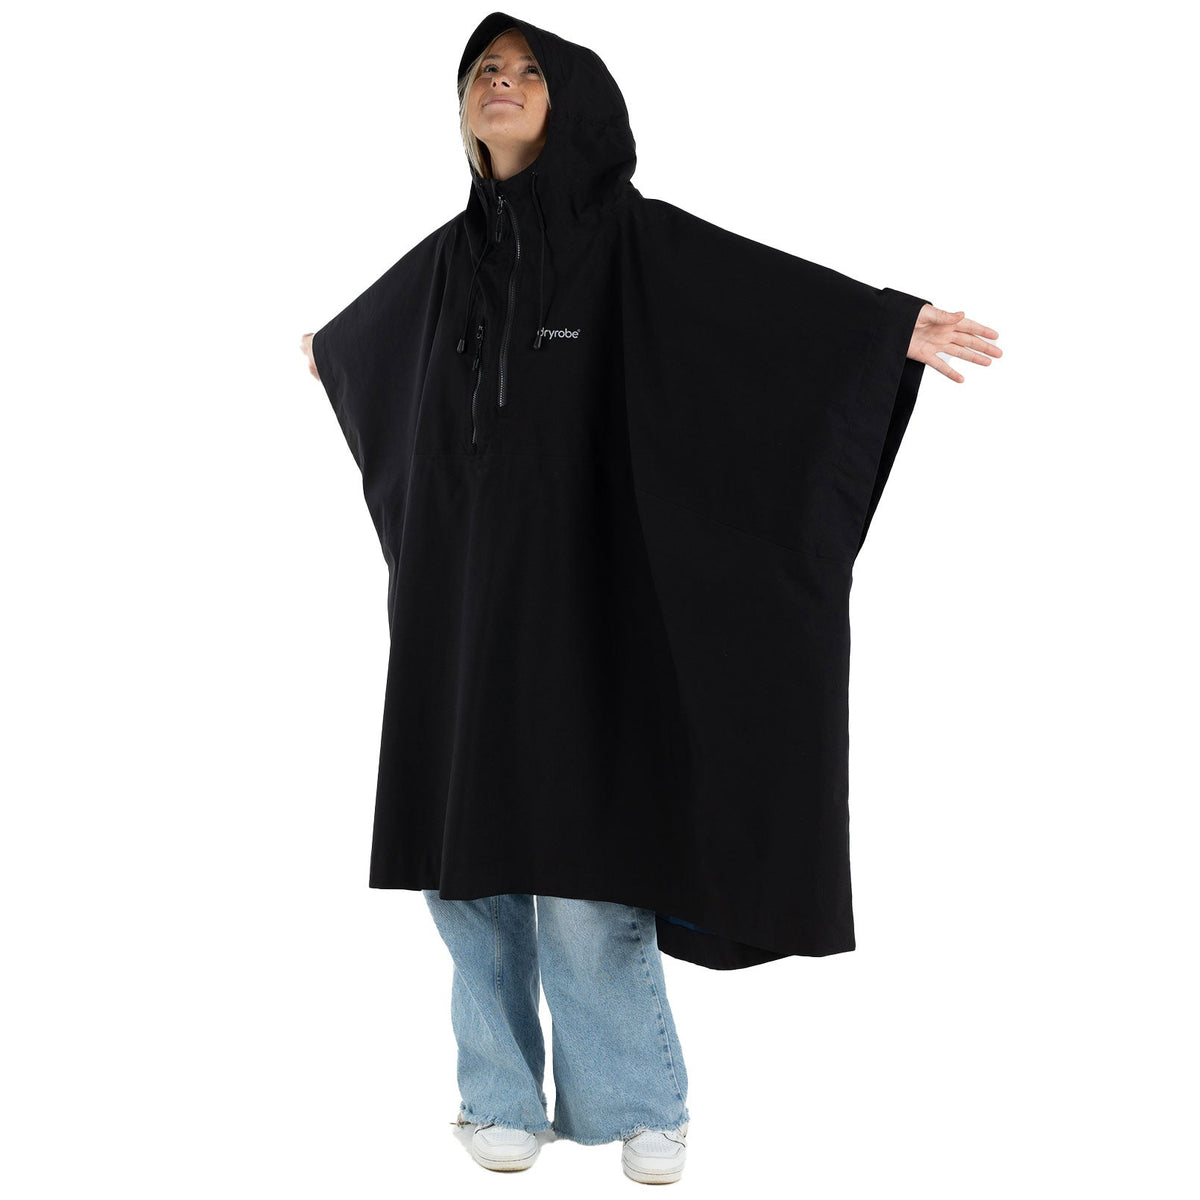 Dryrobe Waterproof Poncho - Black - Changing Robe Poncho Towel by Dryrobe One Size